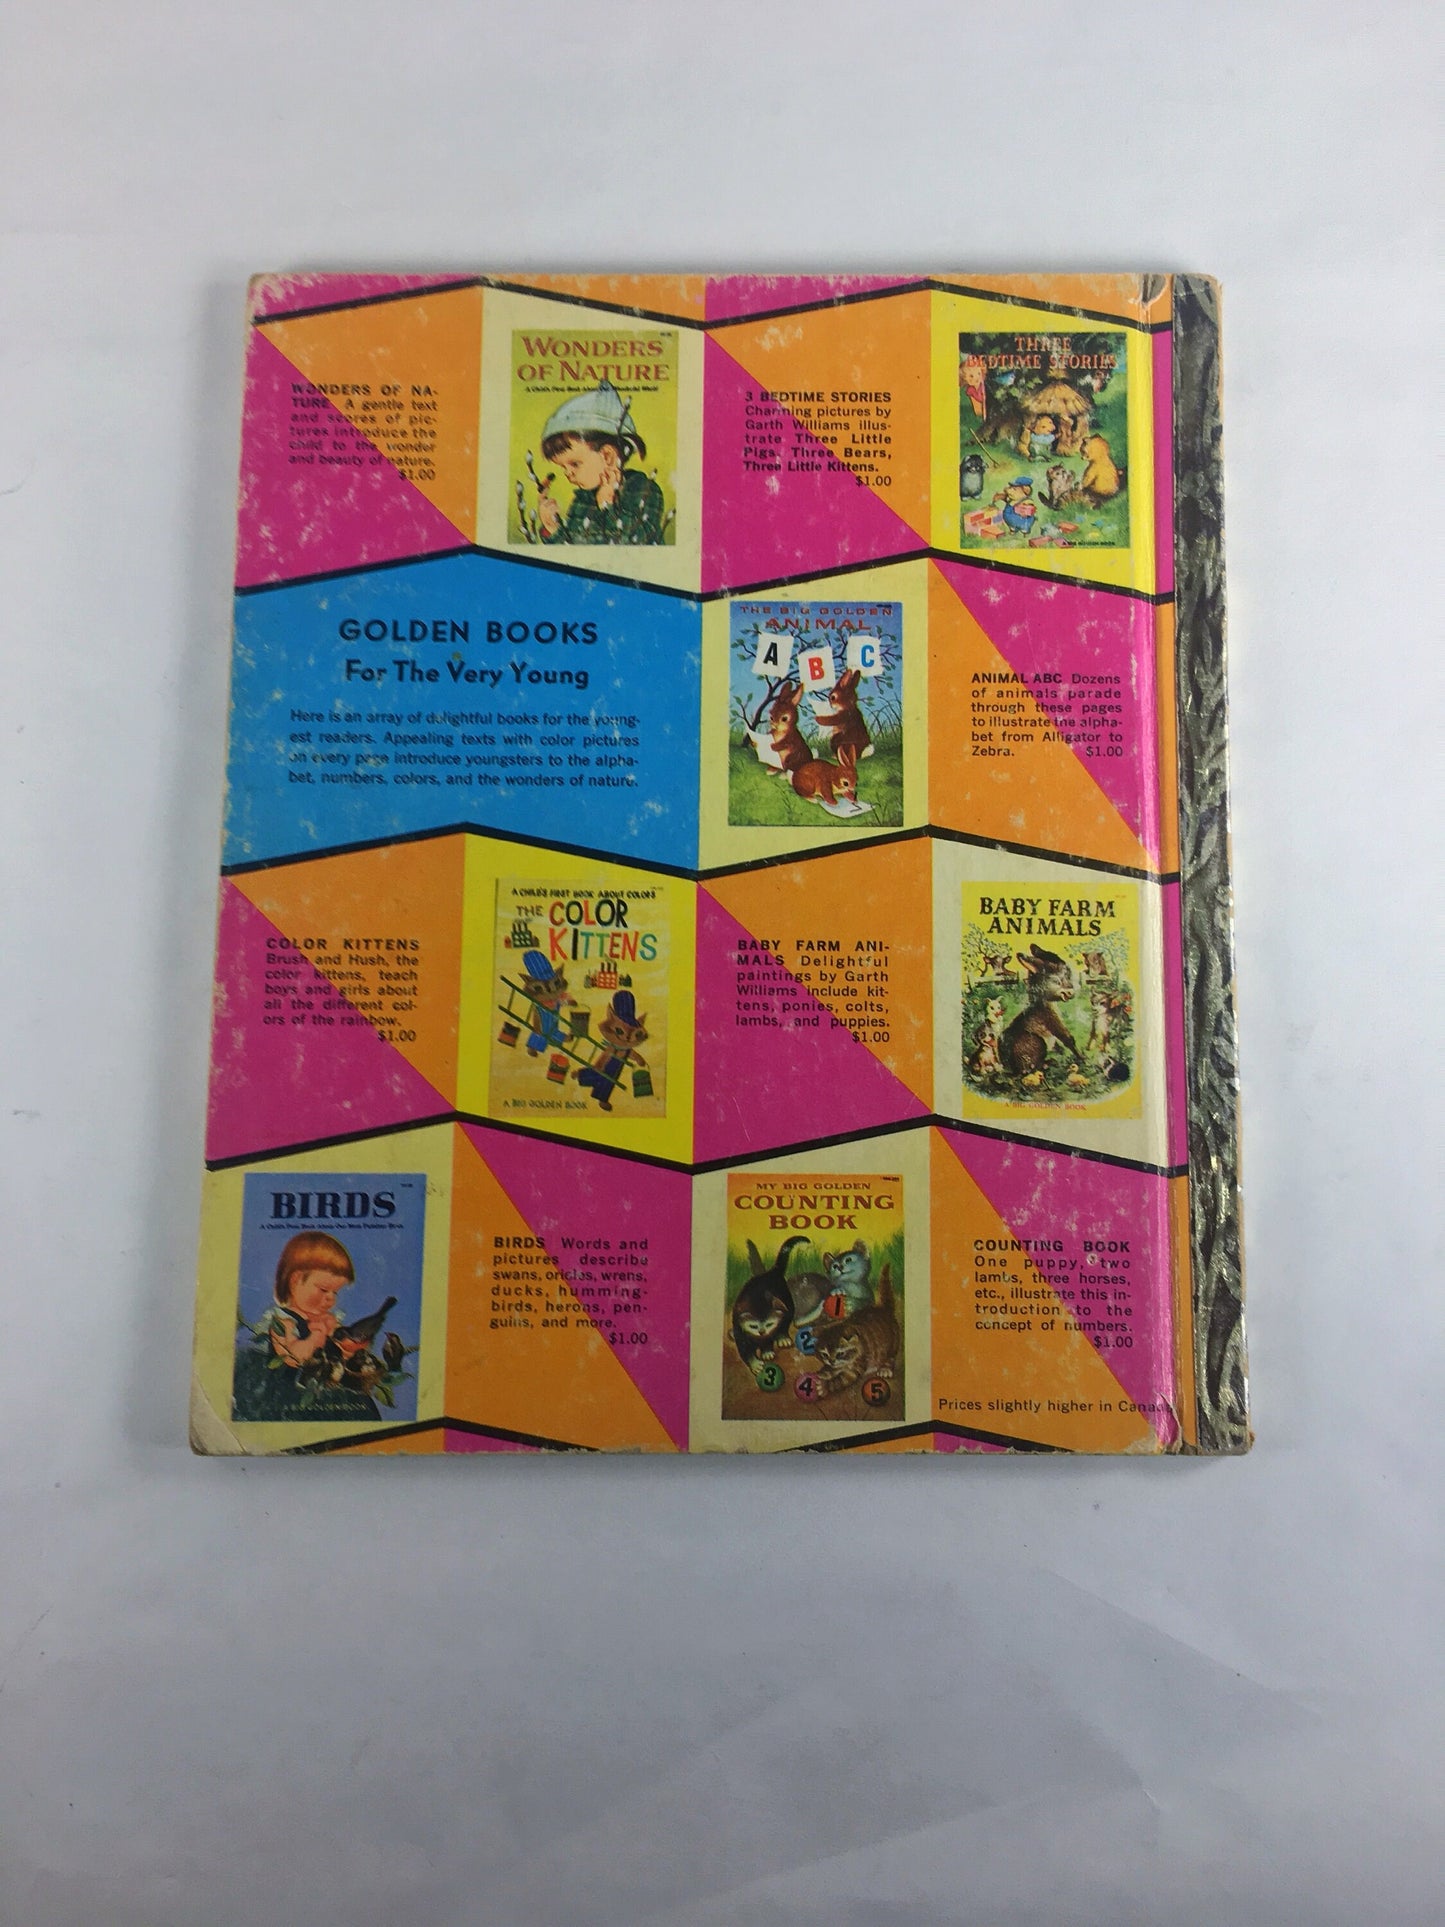 Walt Disney's Babes in Toyland. Vintage Little Golden Book circa 1961 by Barbara Shook Hazen. POOR Condition. Christmas gift